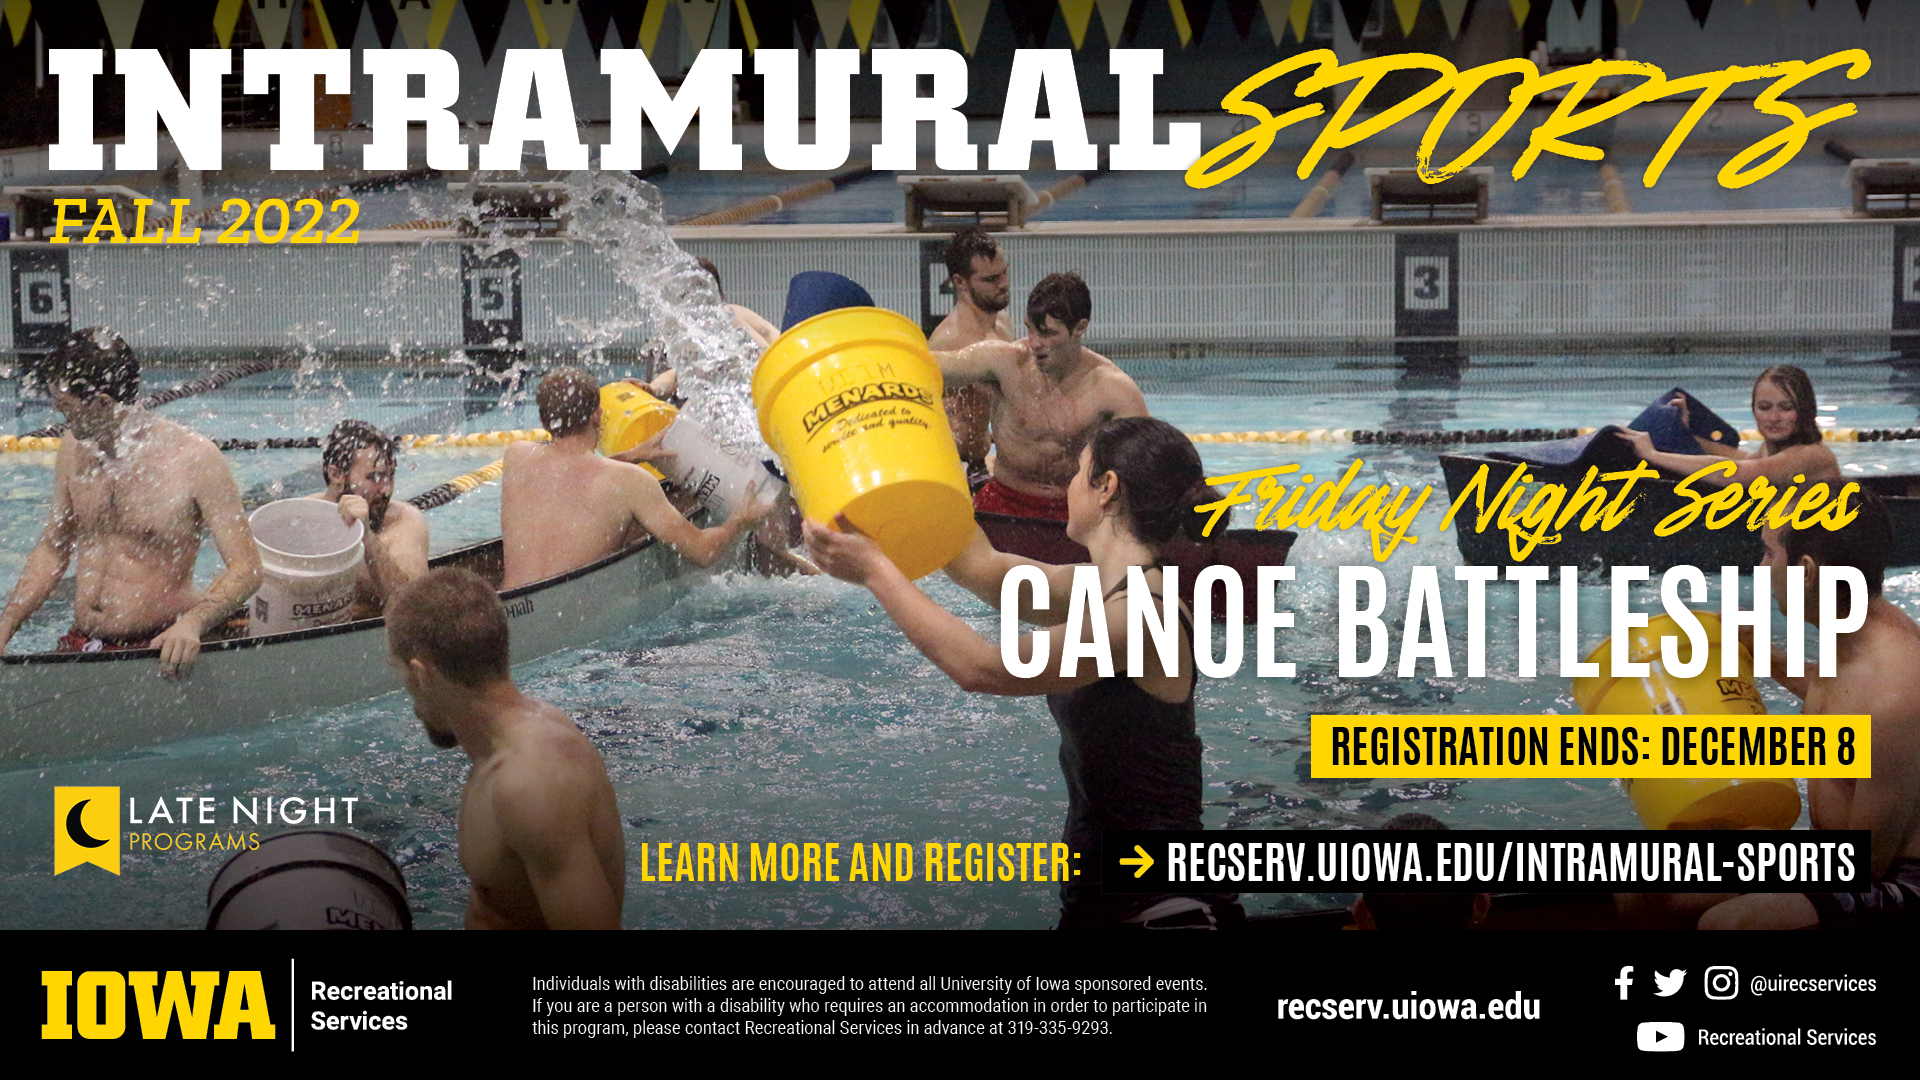 Intramural Sports Fall 2022: FNS Canoe Battleship. Learn more and register at reserv.uiowa.edu/intramural-sports